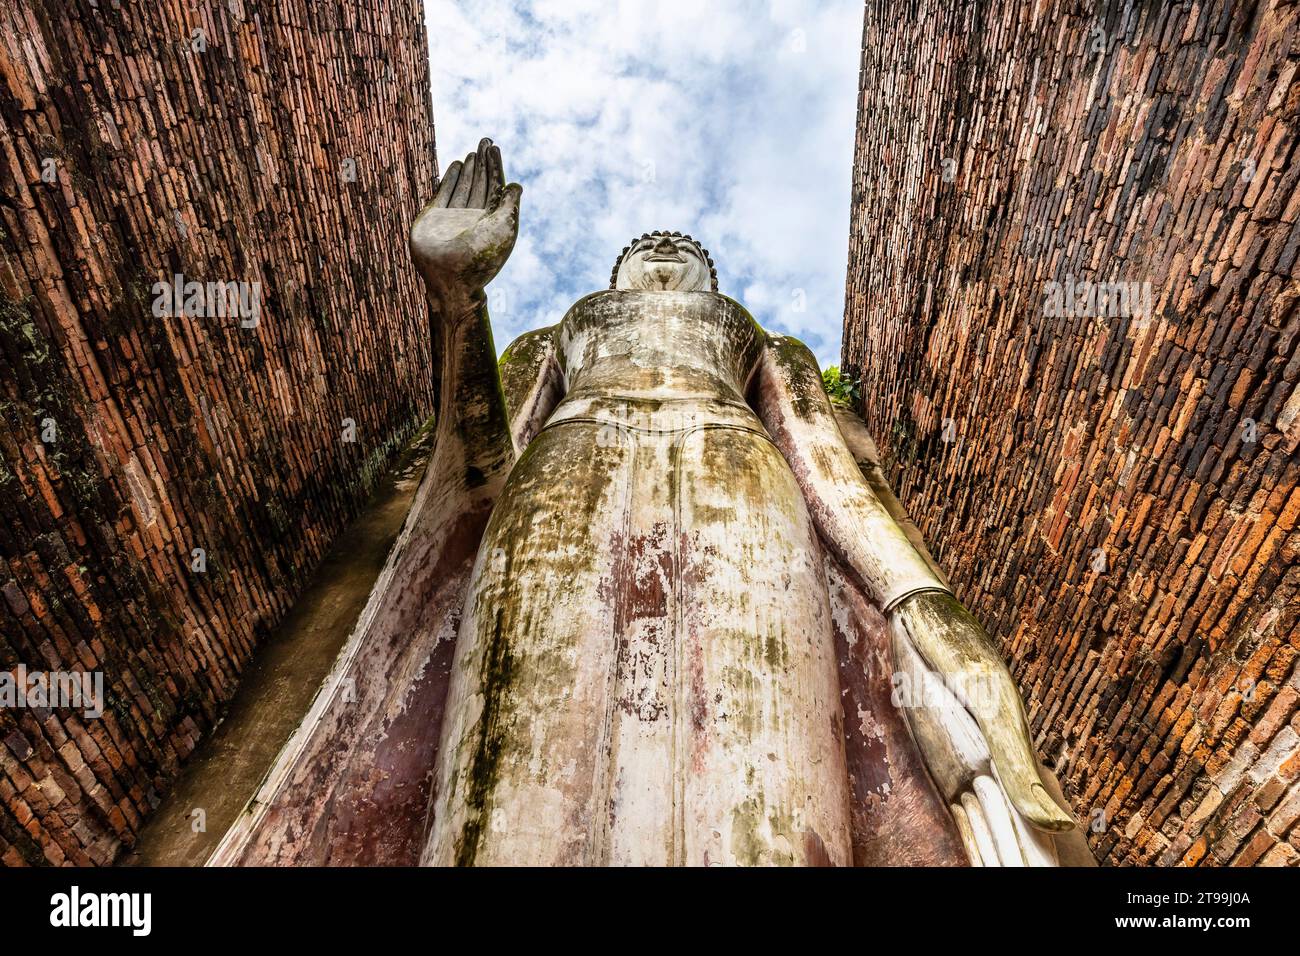 Parco storico di Sukhothai, Wat Mahathat, statua del Buddha in piedi nel piccolo santuario, Sukhothai, Thailandia, Sud-est asiatico, Asia Foto Stock